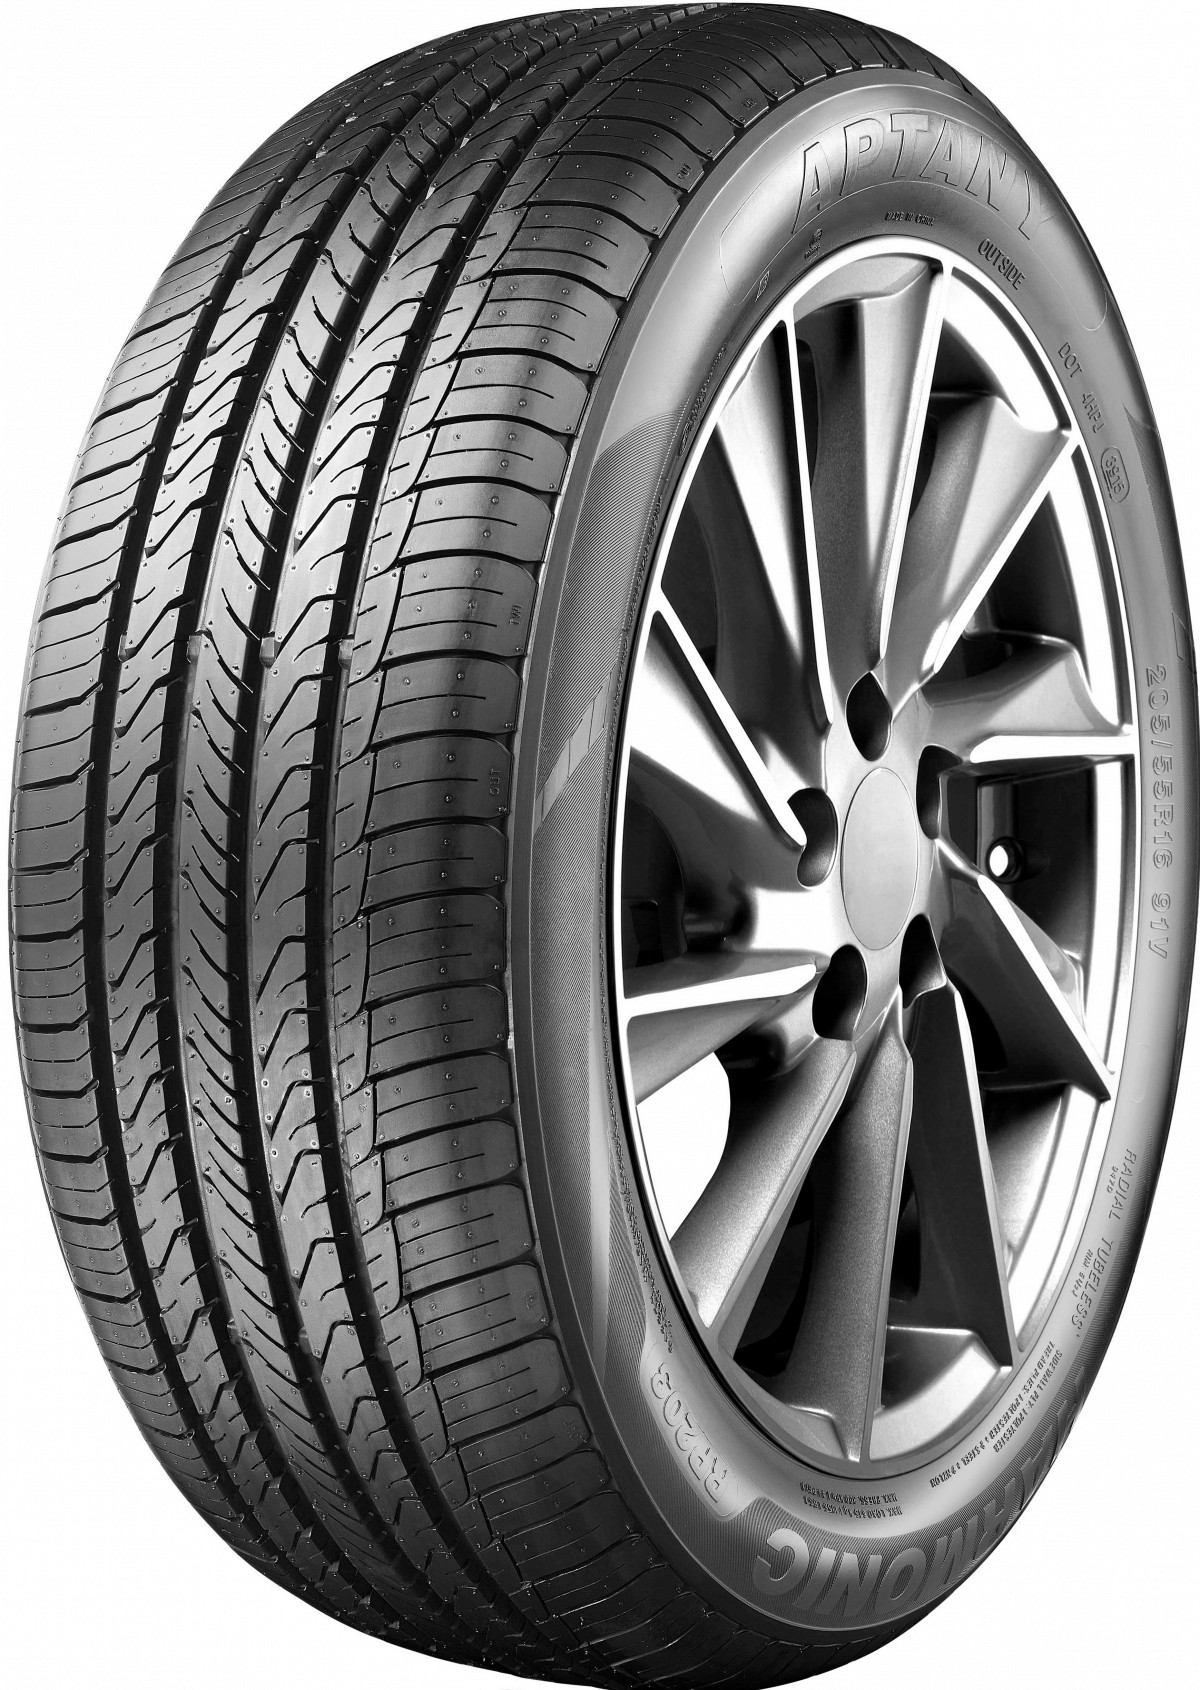 Neumáticos 205 60 R16 92H precio 52,52 € — Aptany RP203 EAN:6950306347580